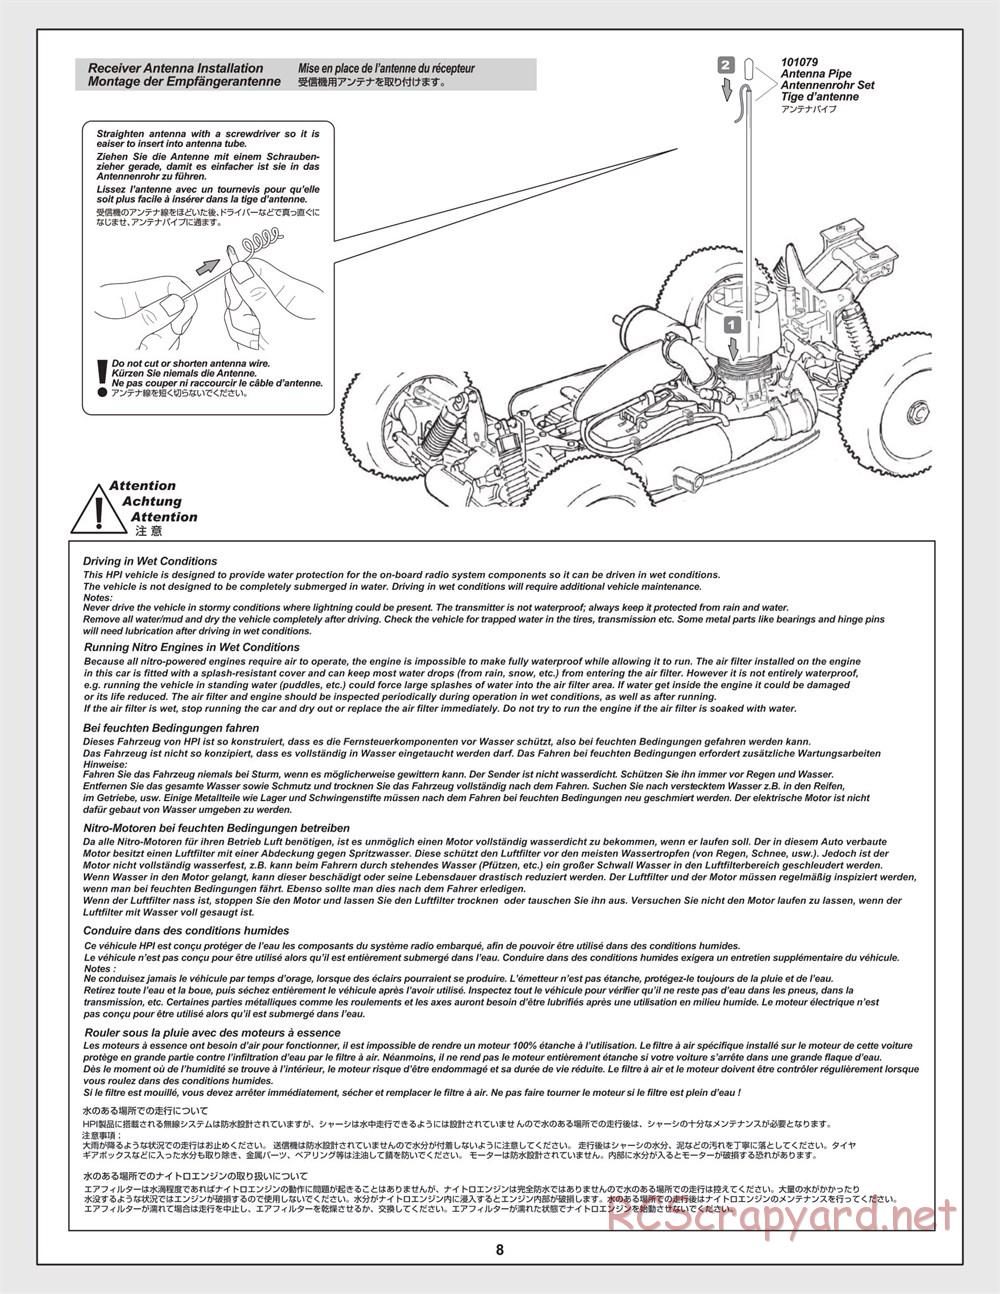 HPI - Trophy 3.5 - Manual - Page 8